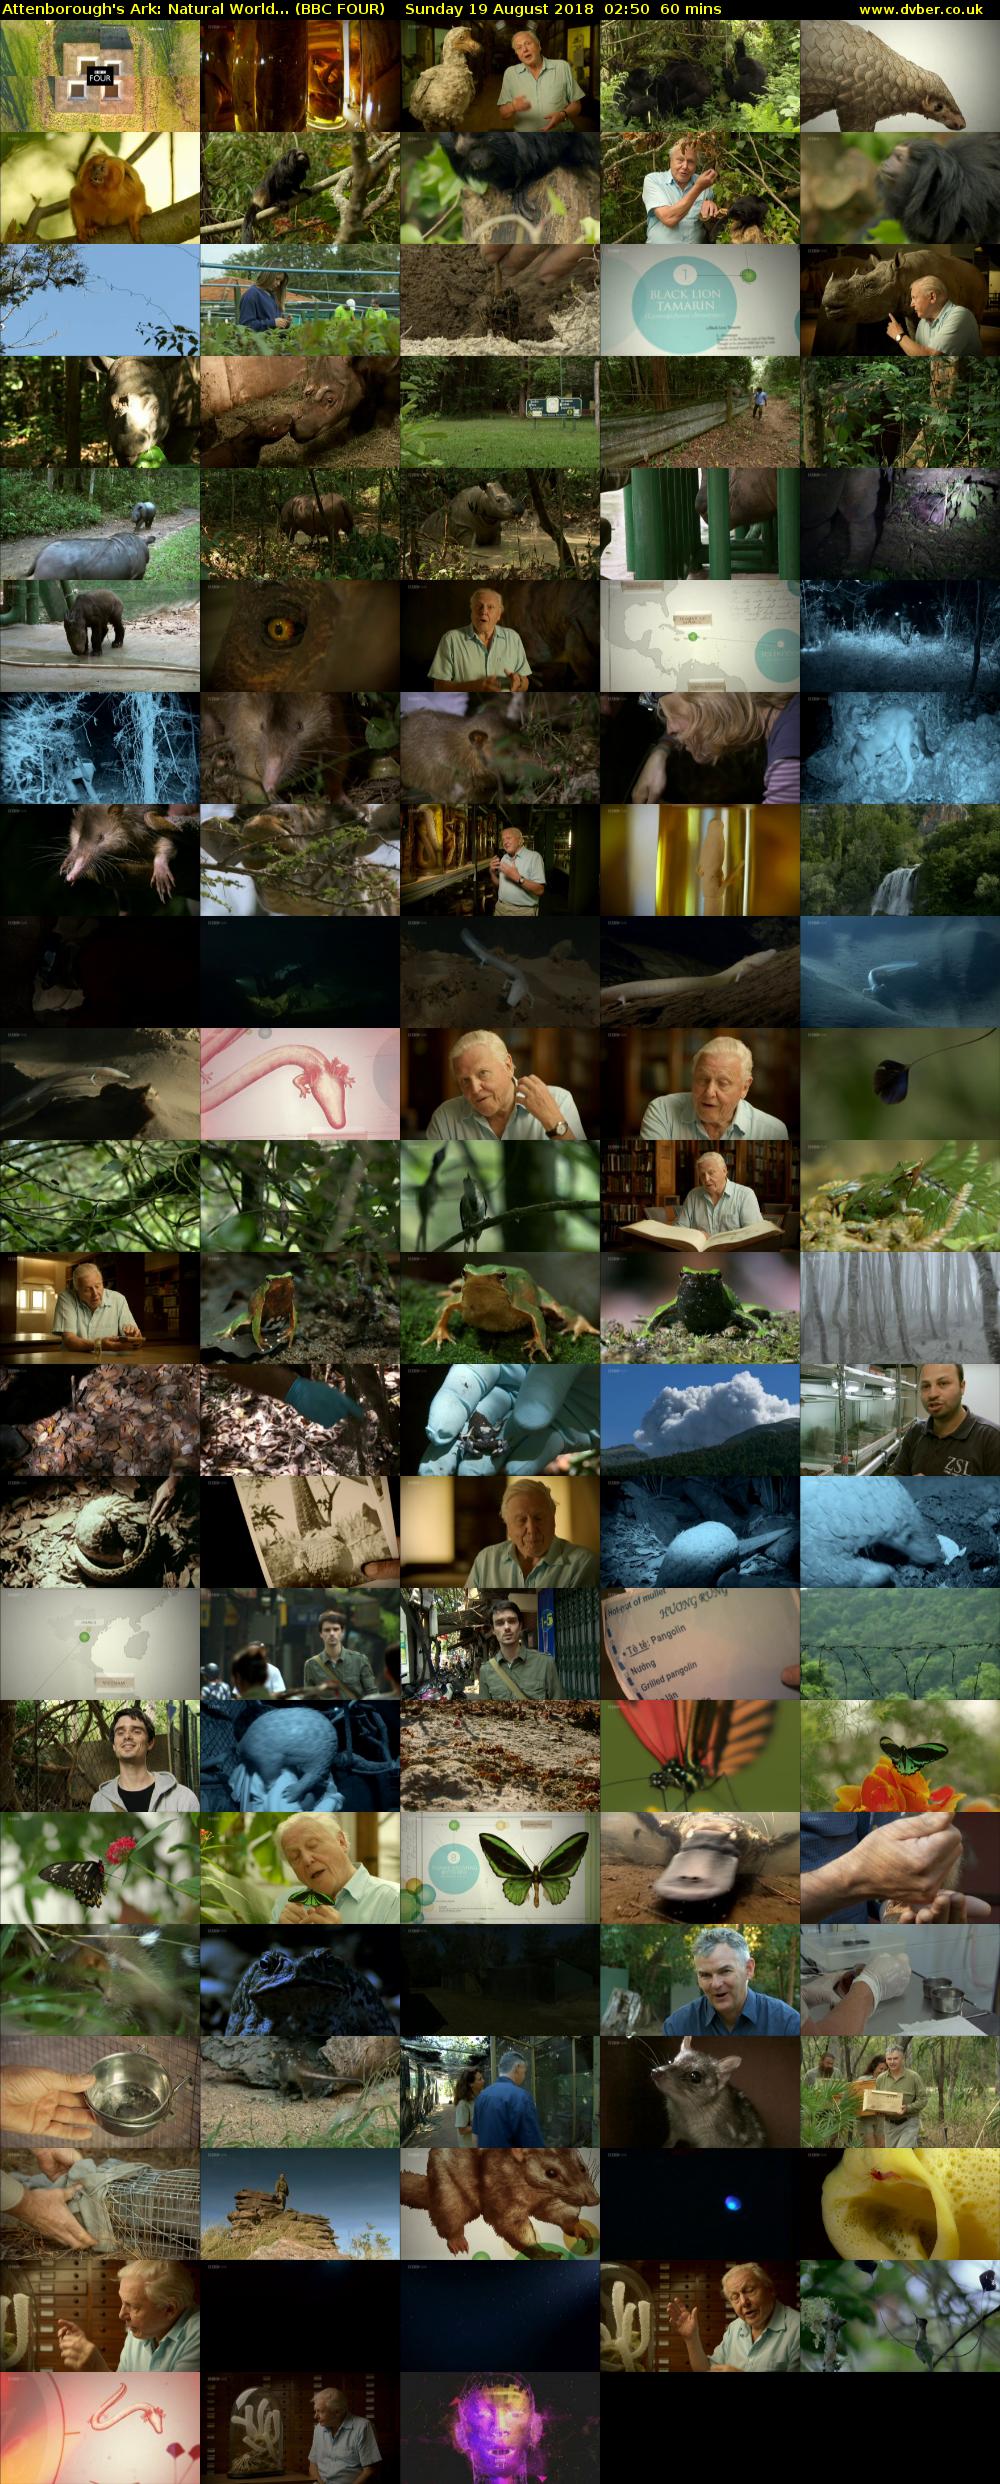 Attenborough's Ark: Natural World... (BBC FOUR) Sunday 19 August 2018 02:50 - 03:50